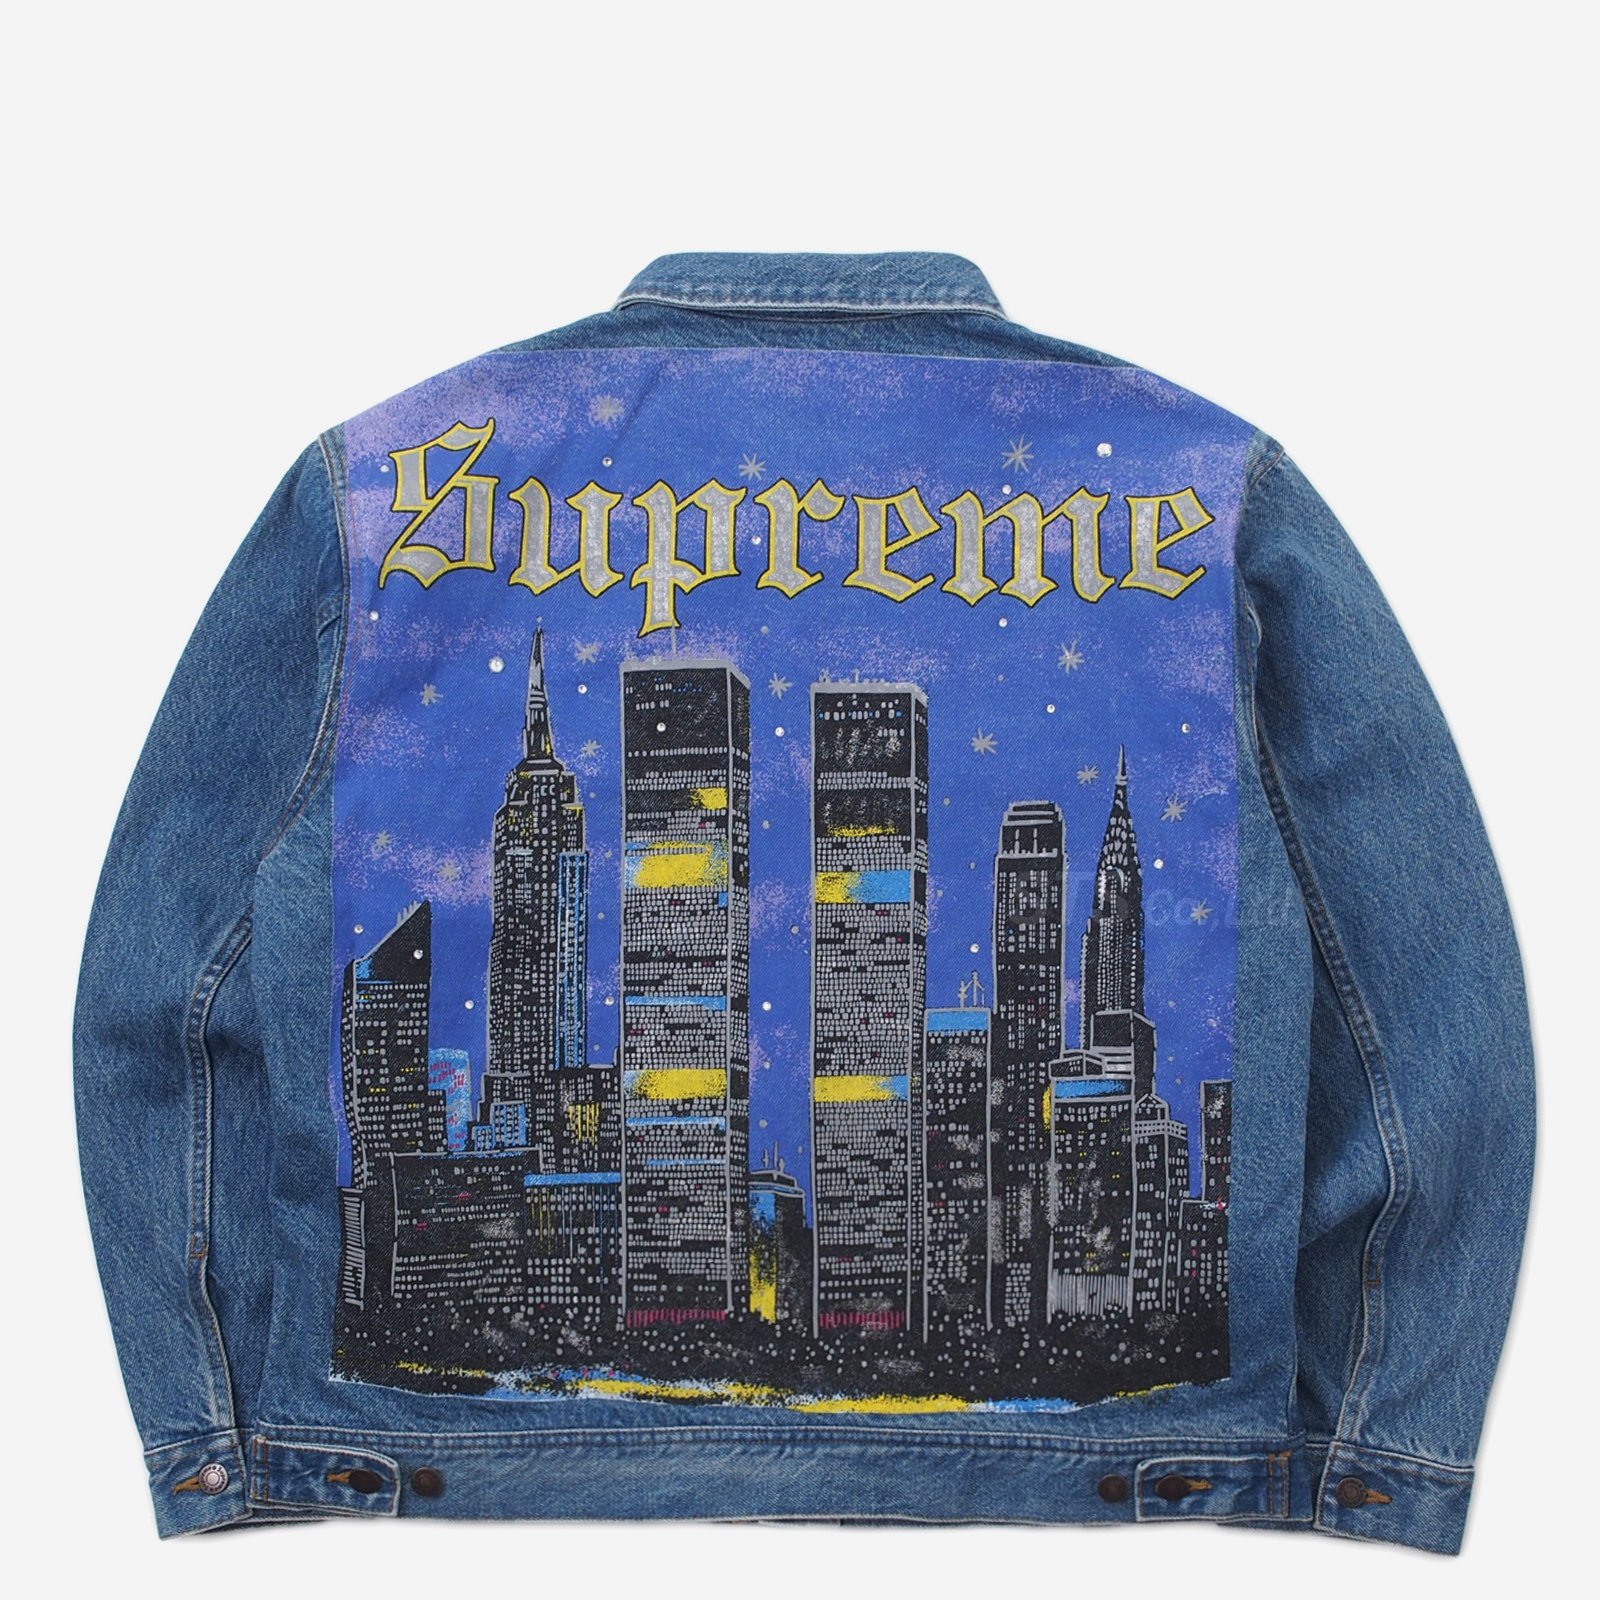 Supreme☆New York Painted Trucker Jacket